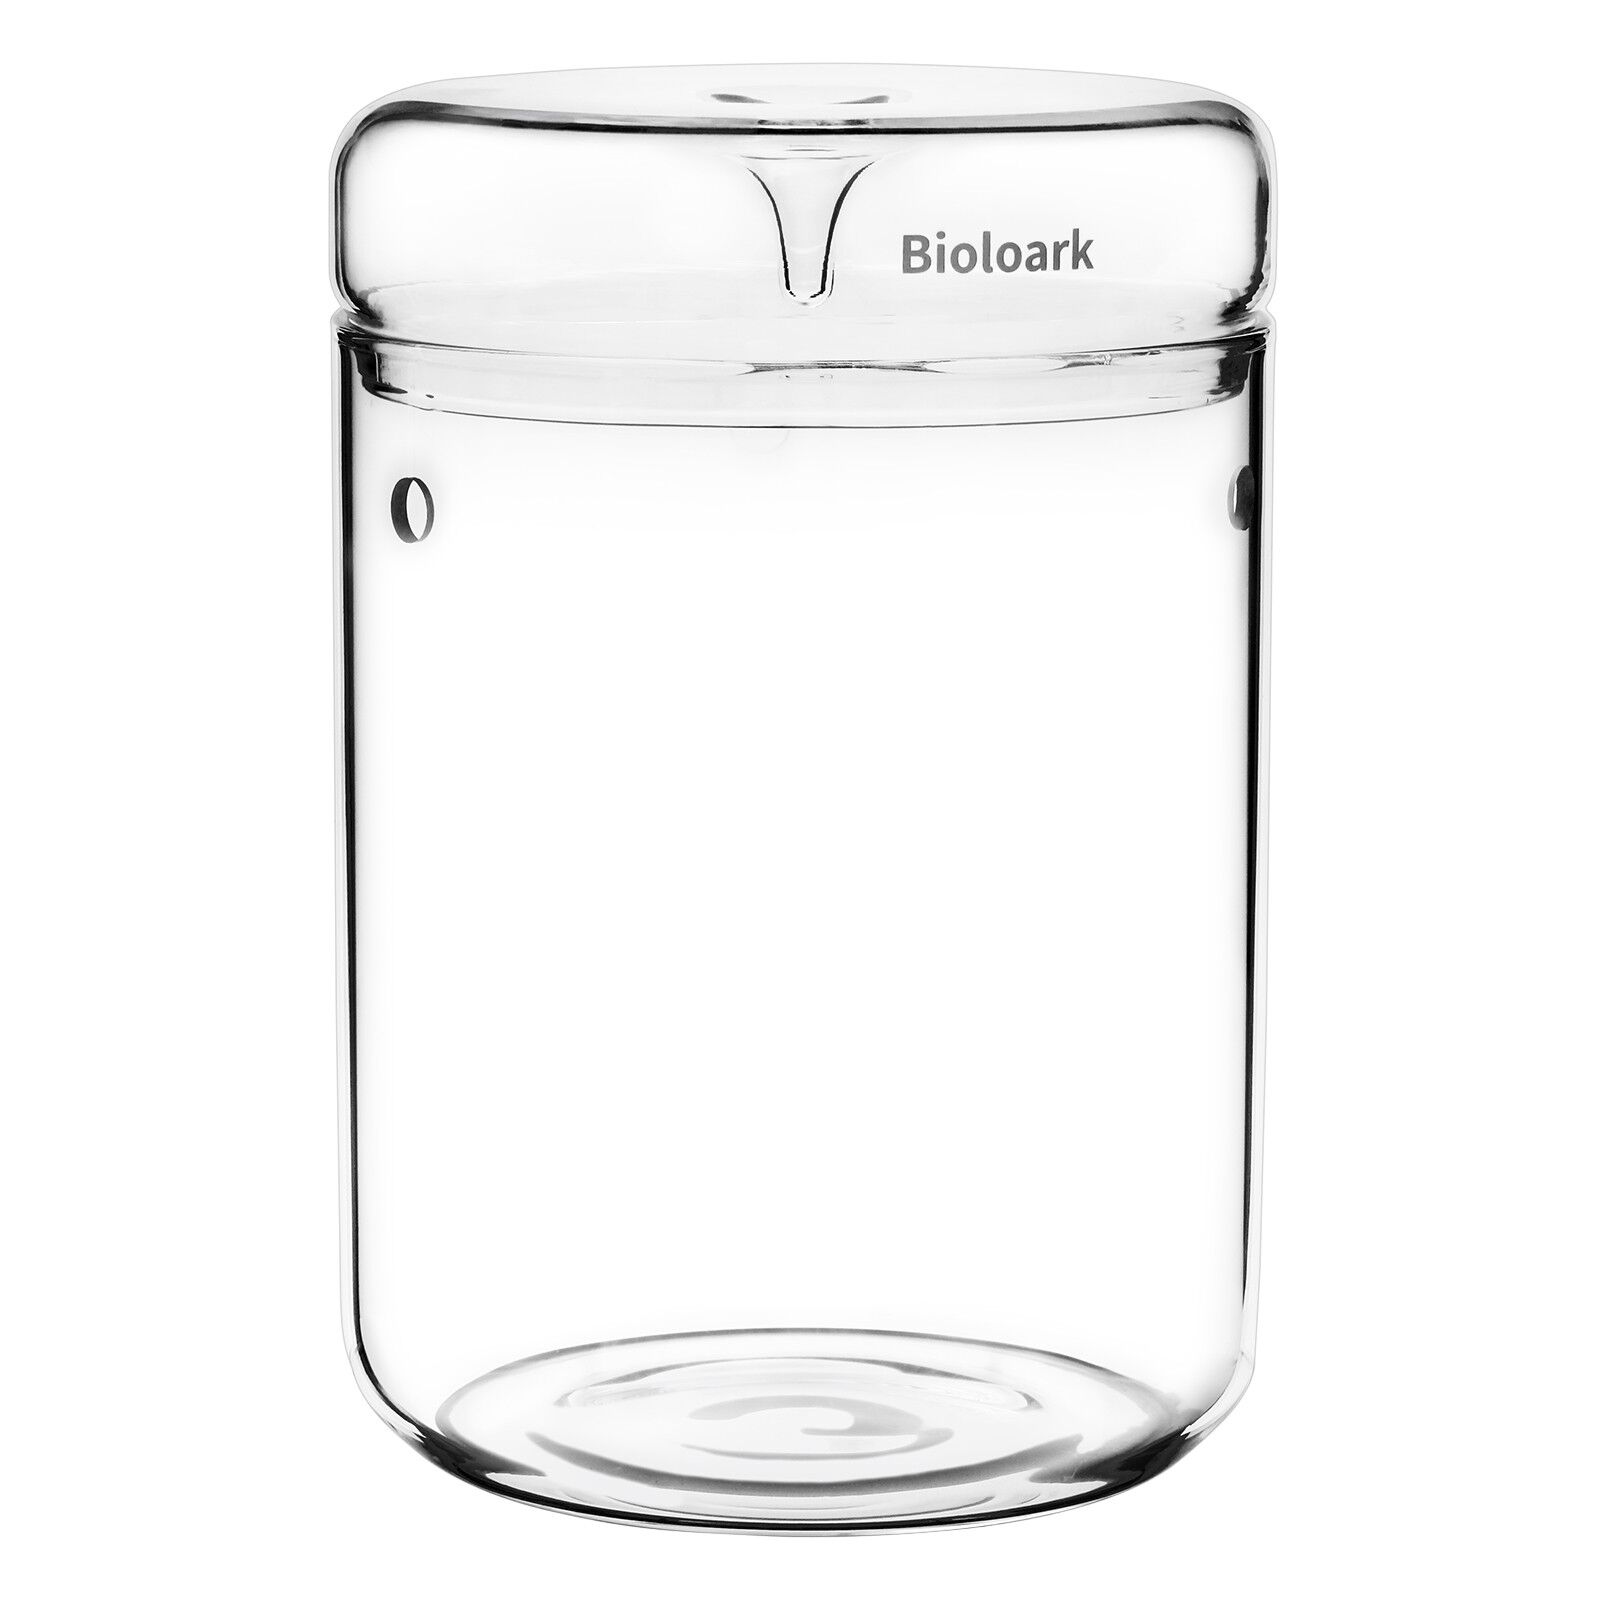 https://www.aquasabi.com/media/image/product/31880/lg/bioloark-luji-glass-cup.jpg